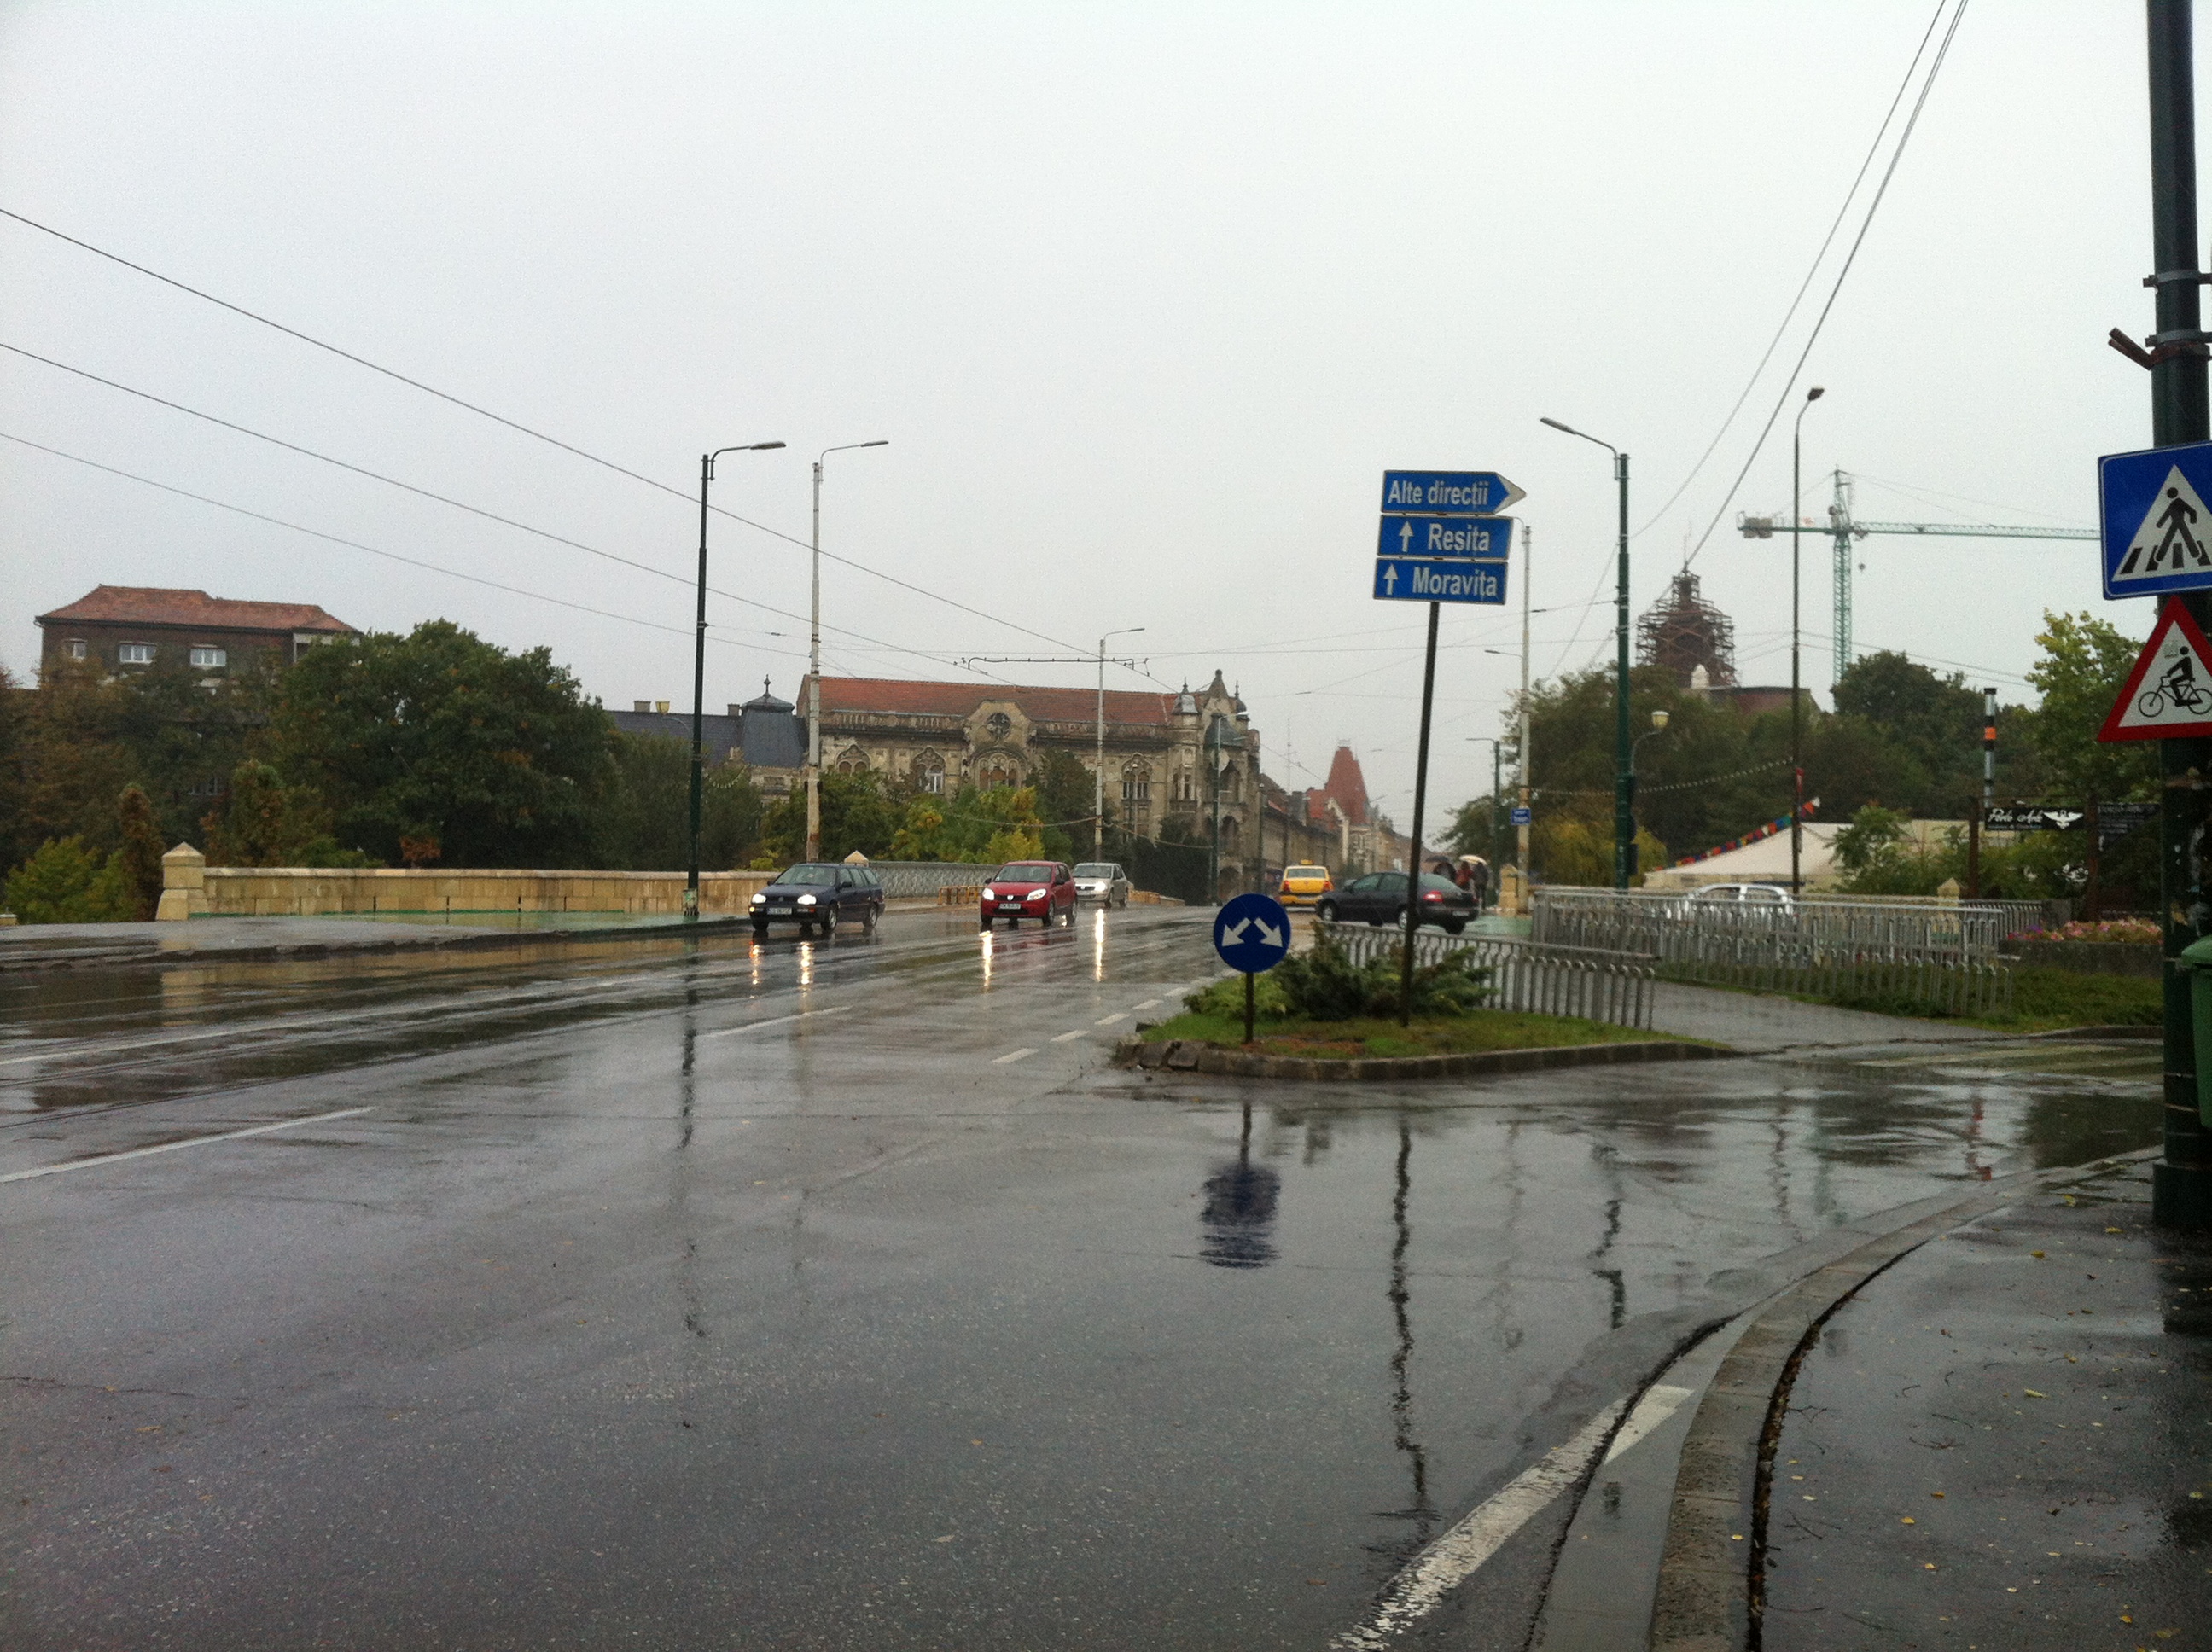 Sistemul de management al traficului si supraveghere video din Timisoara, in pericol sa piarda finantarea europeana